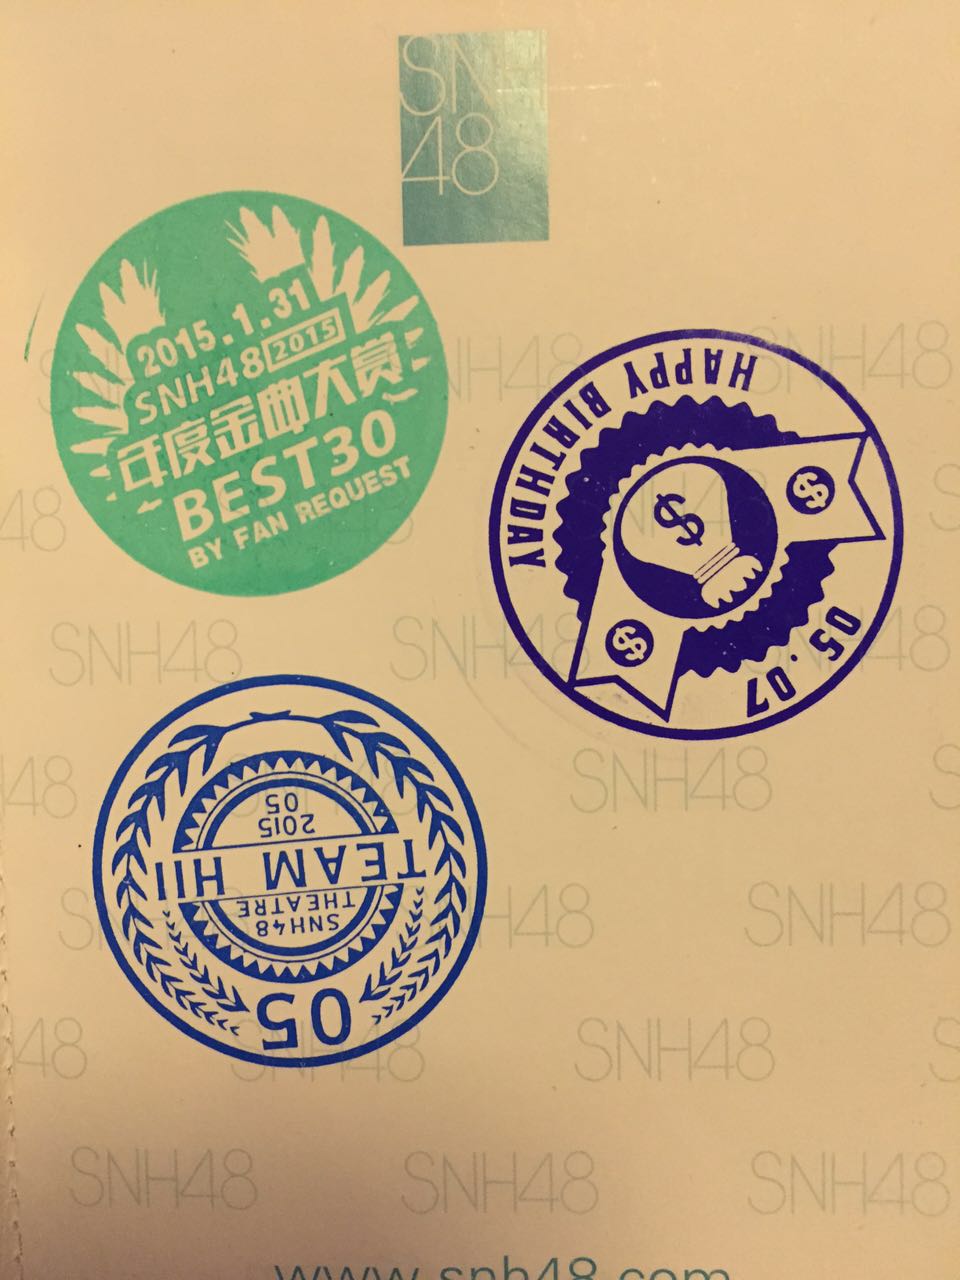 SNH48 Passport